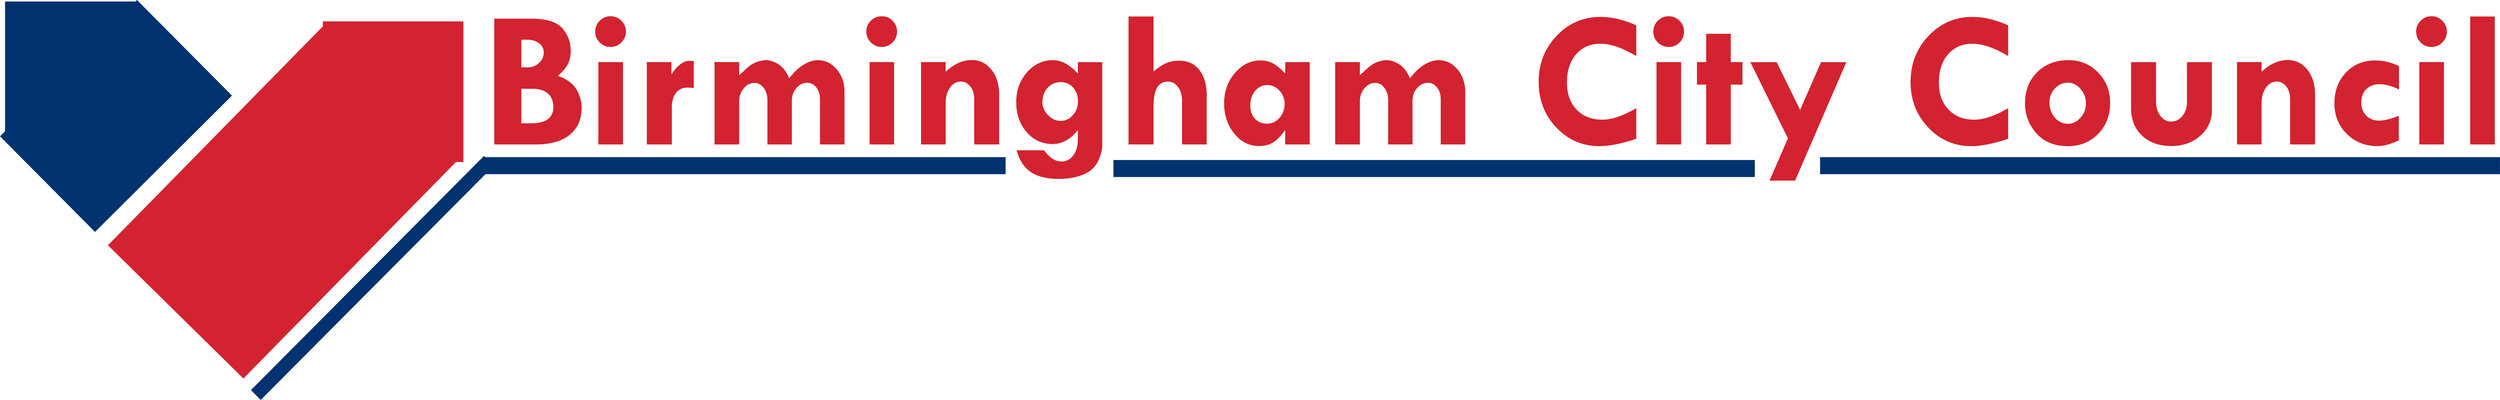 Birmingham-City-Council-logo.jpg